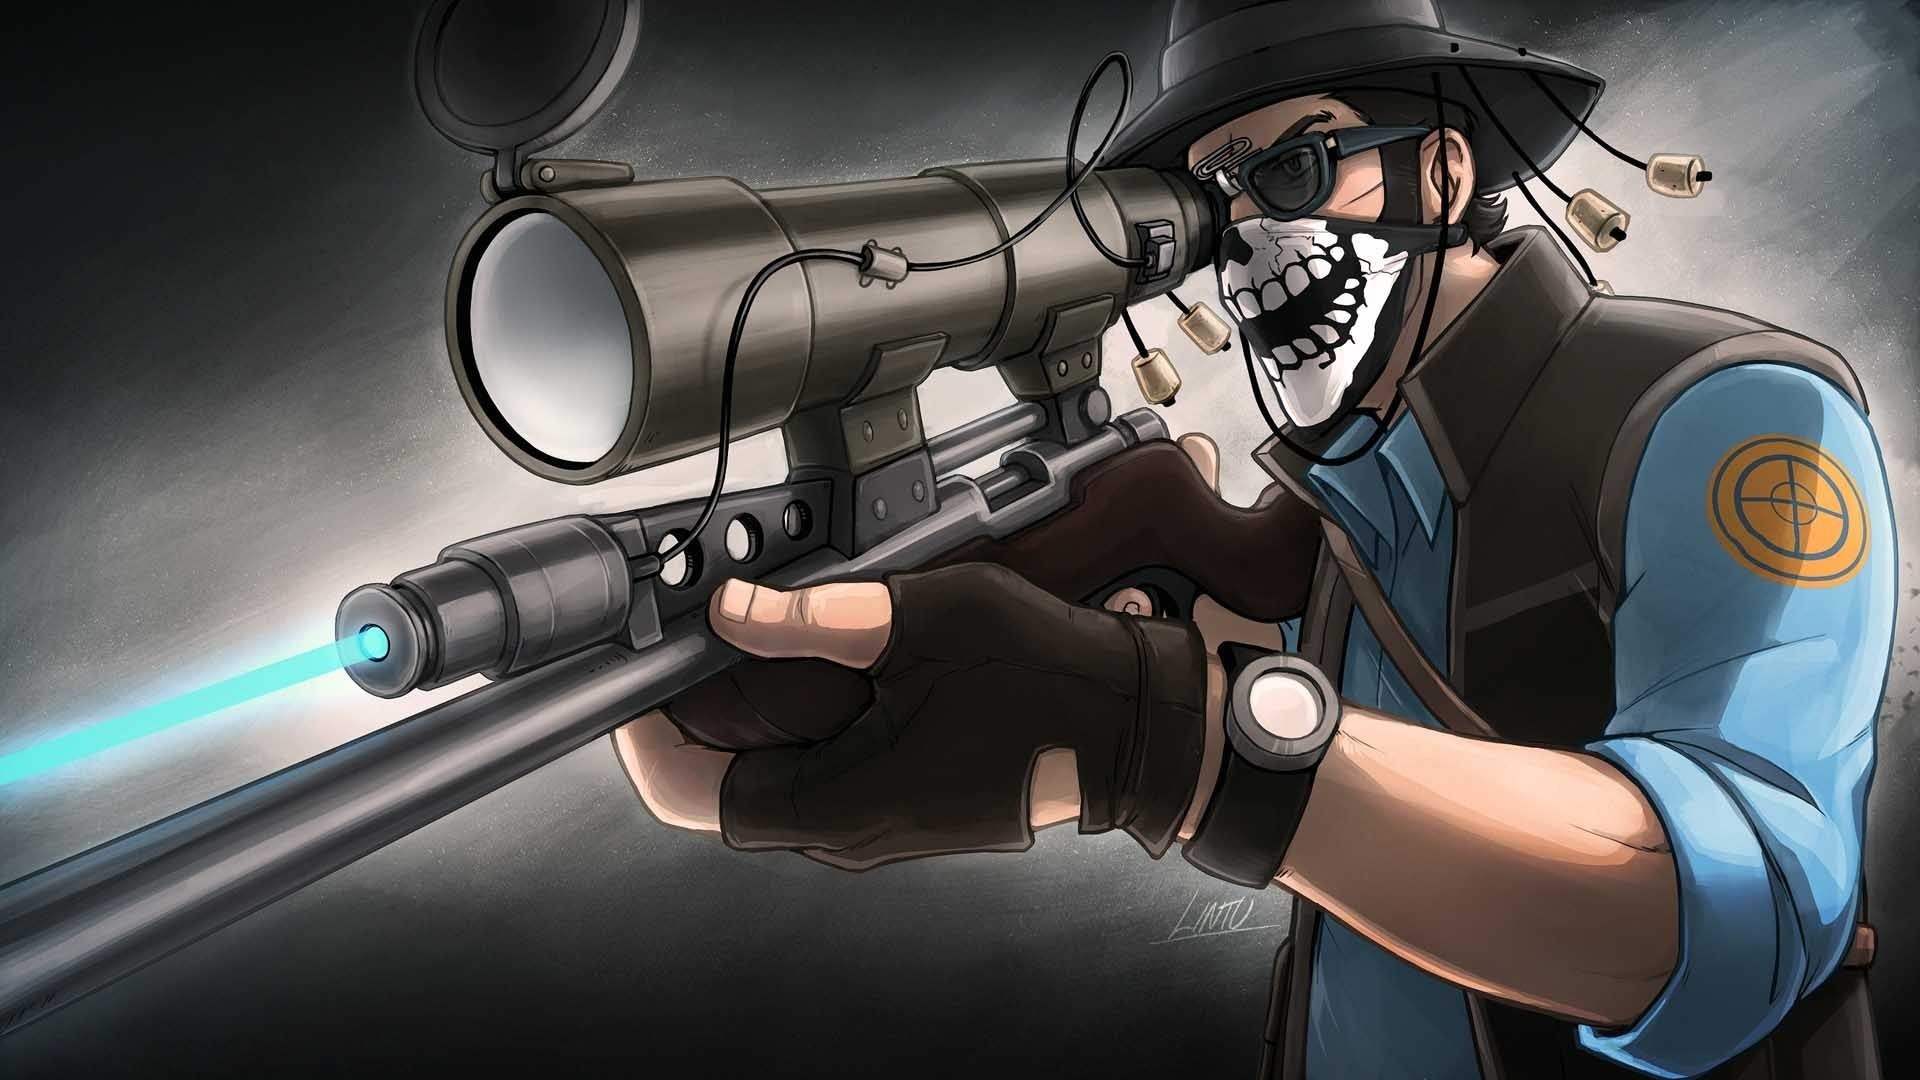 Team Fortress Sniper Wallpaper Image